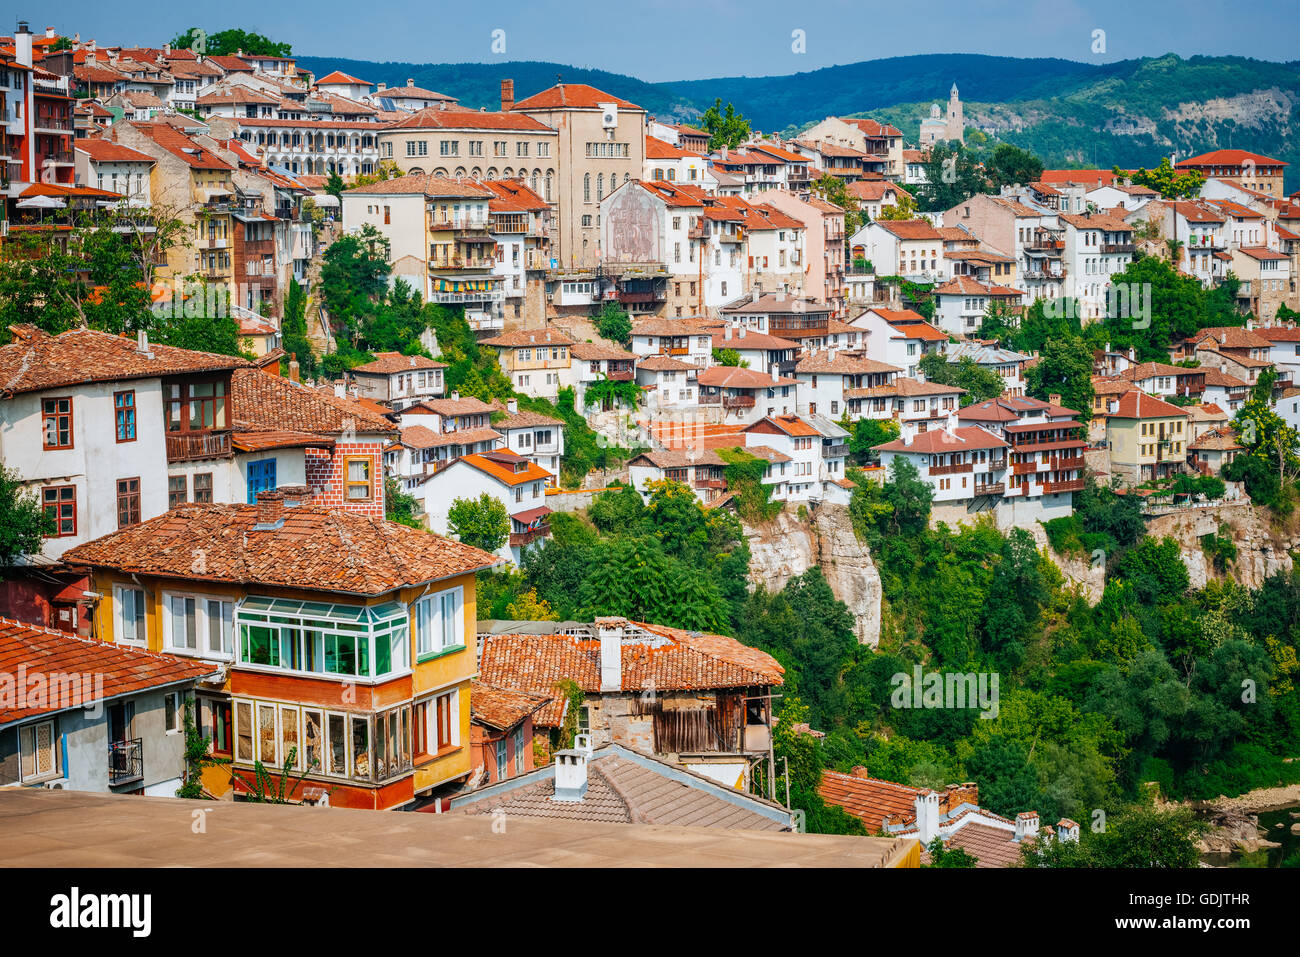 View of Veliko Tarnovo, a city in north central Bulgaria Stock Photo